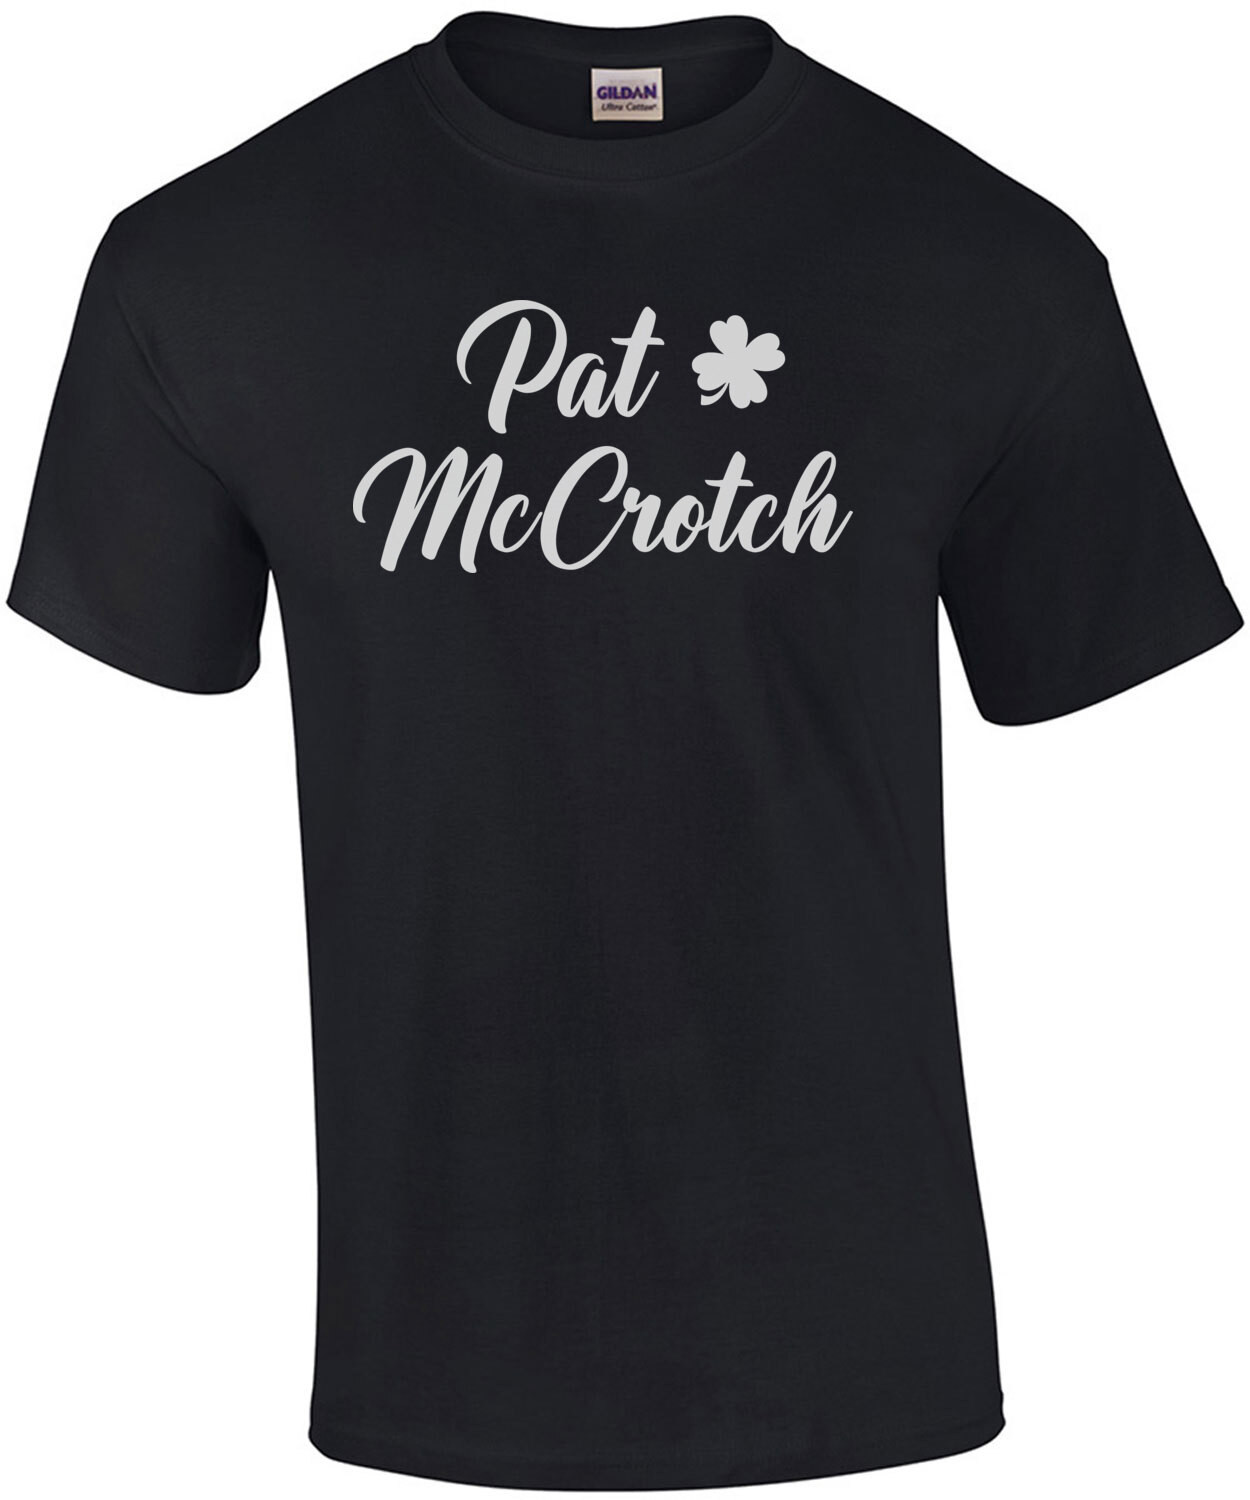 Pat McCrotch - Funny Irish - St. Patrick's Day T-Shirt